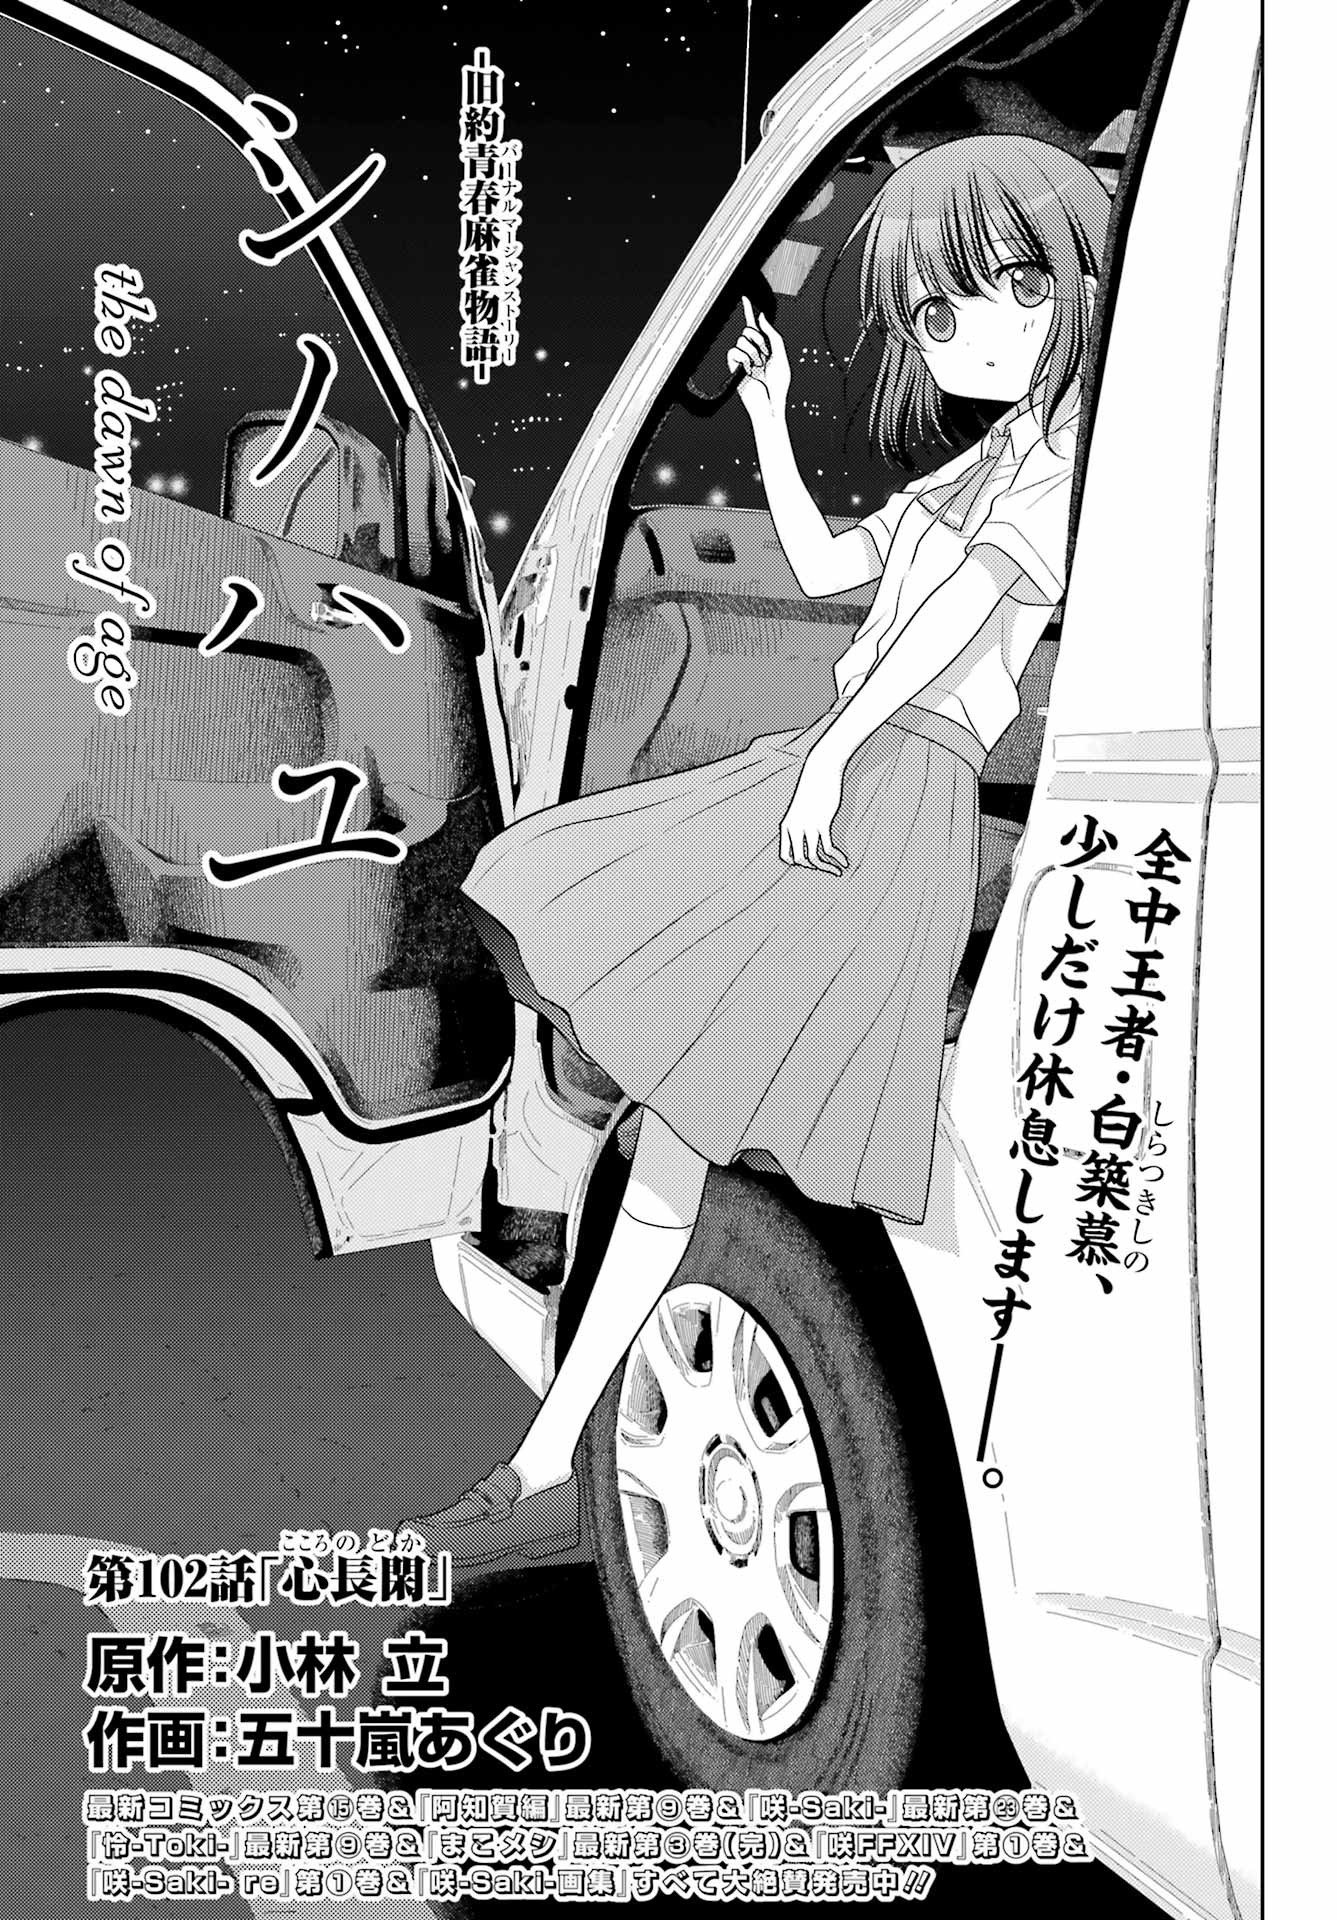 Shinohayu - The Dawn of Age Manga - Chapter 102 - Page 1